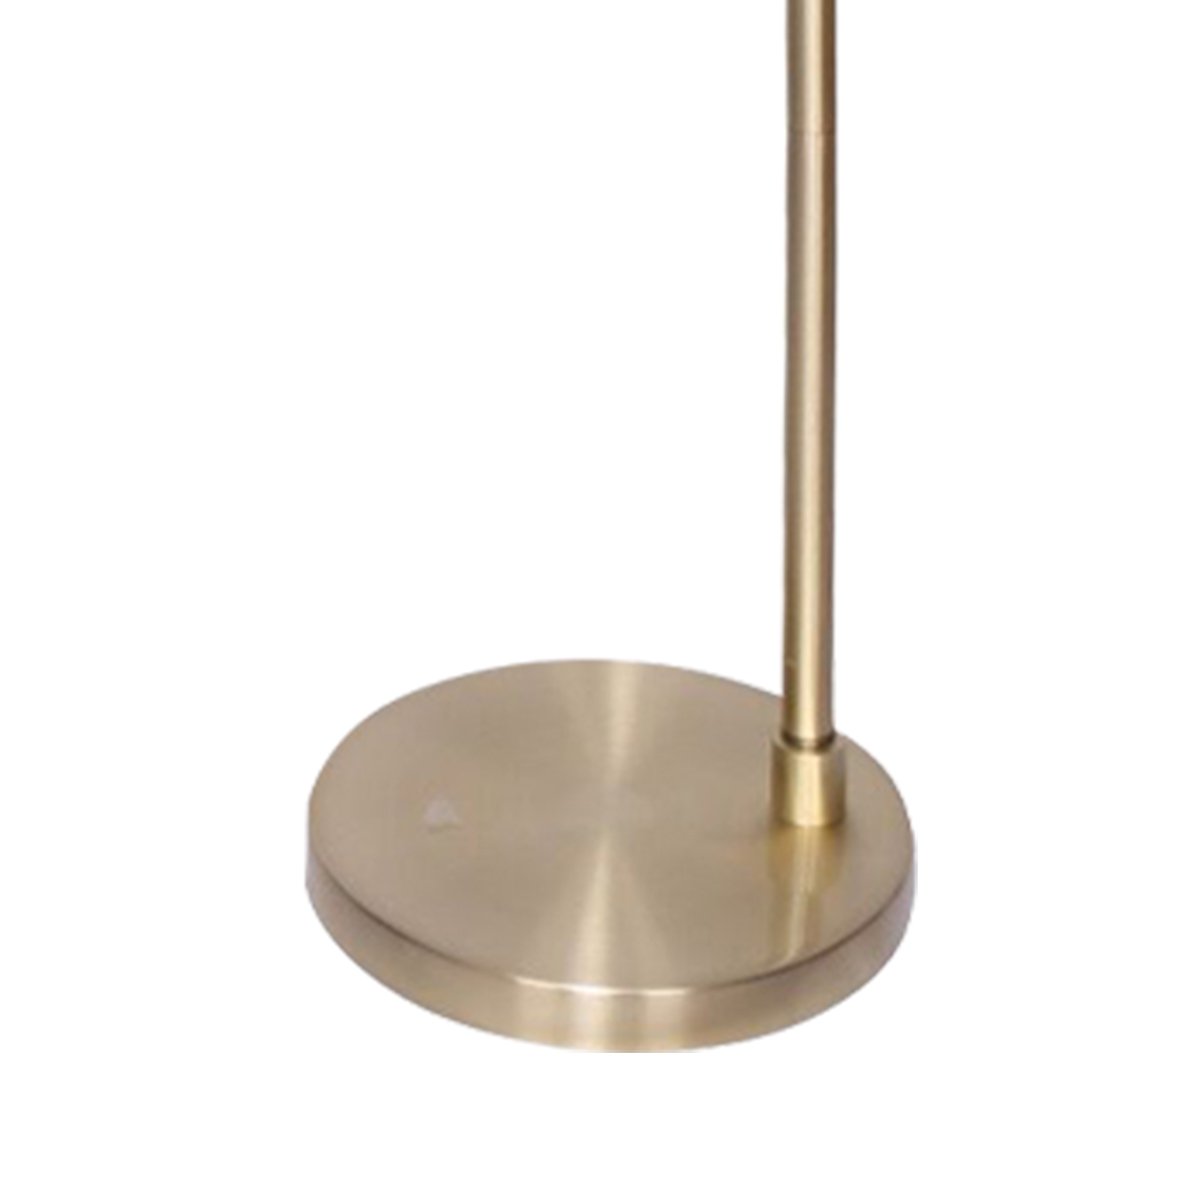 Sarantino Metal Floor Lamp Brass Finish Adjustable Height - BM House & Garden